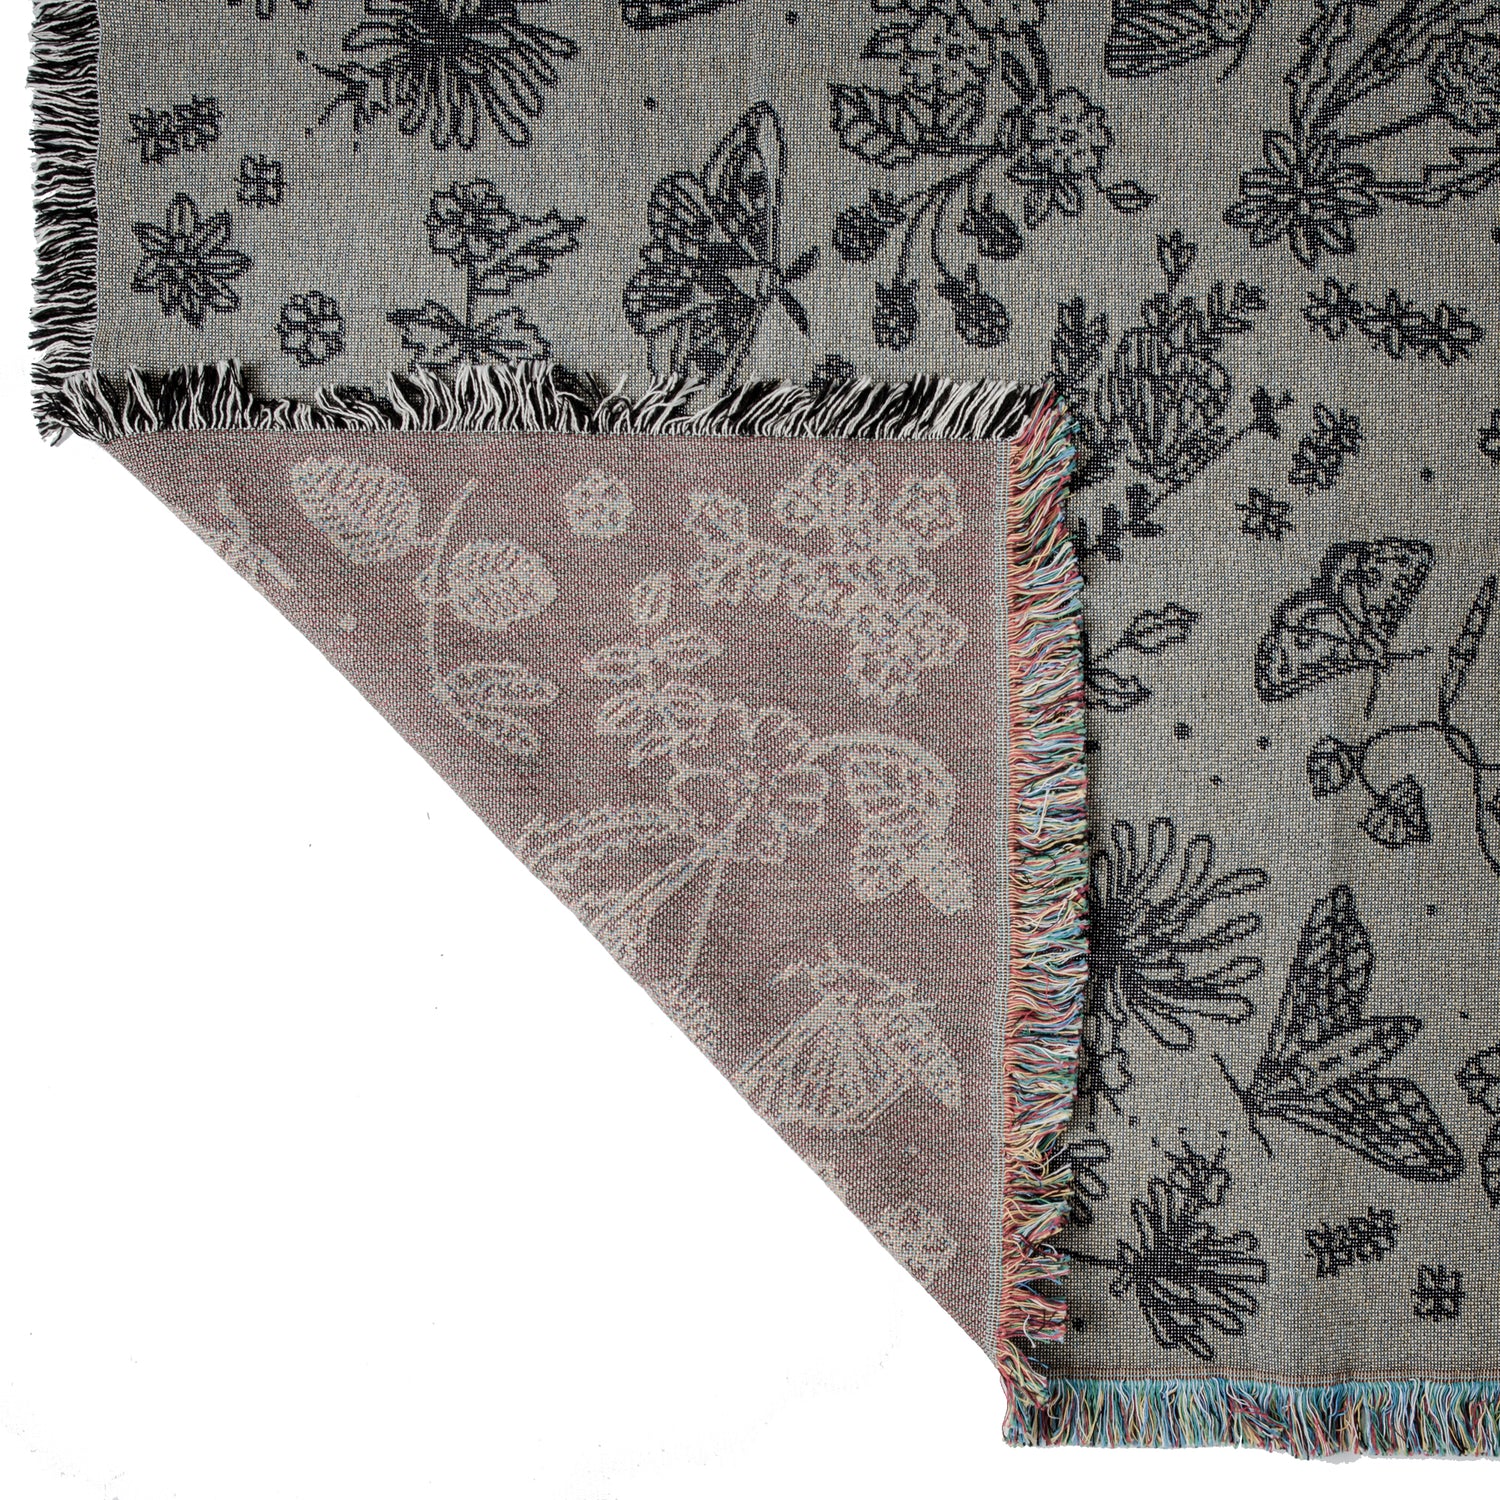 detail of Pretty grey blanket with black pattern of moths, berries, leaves and flowers